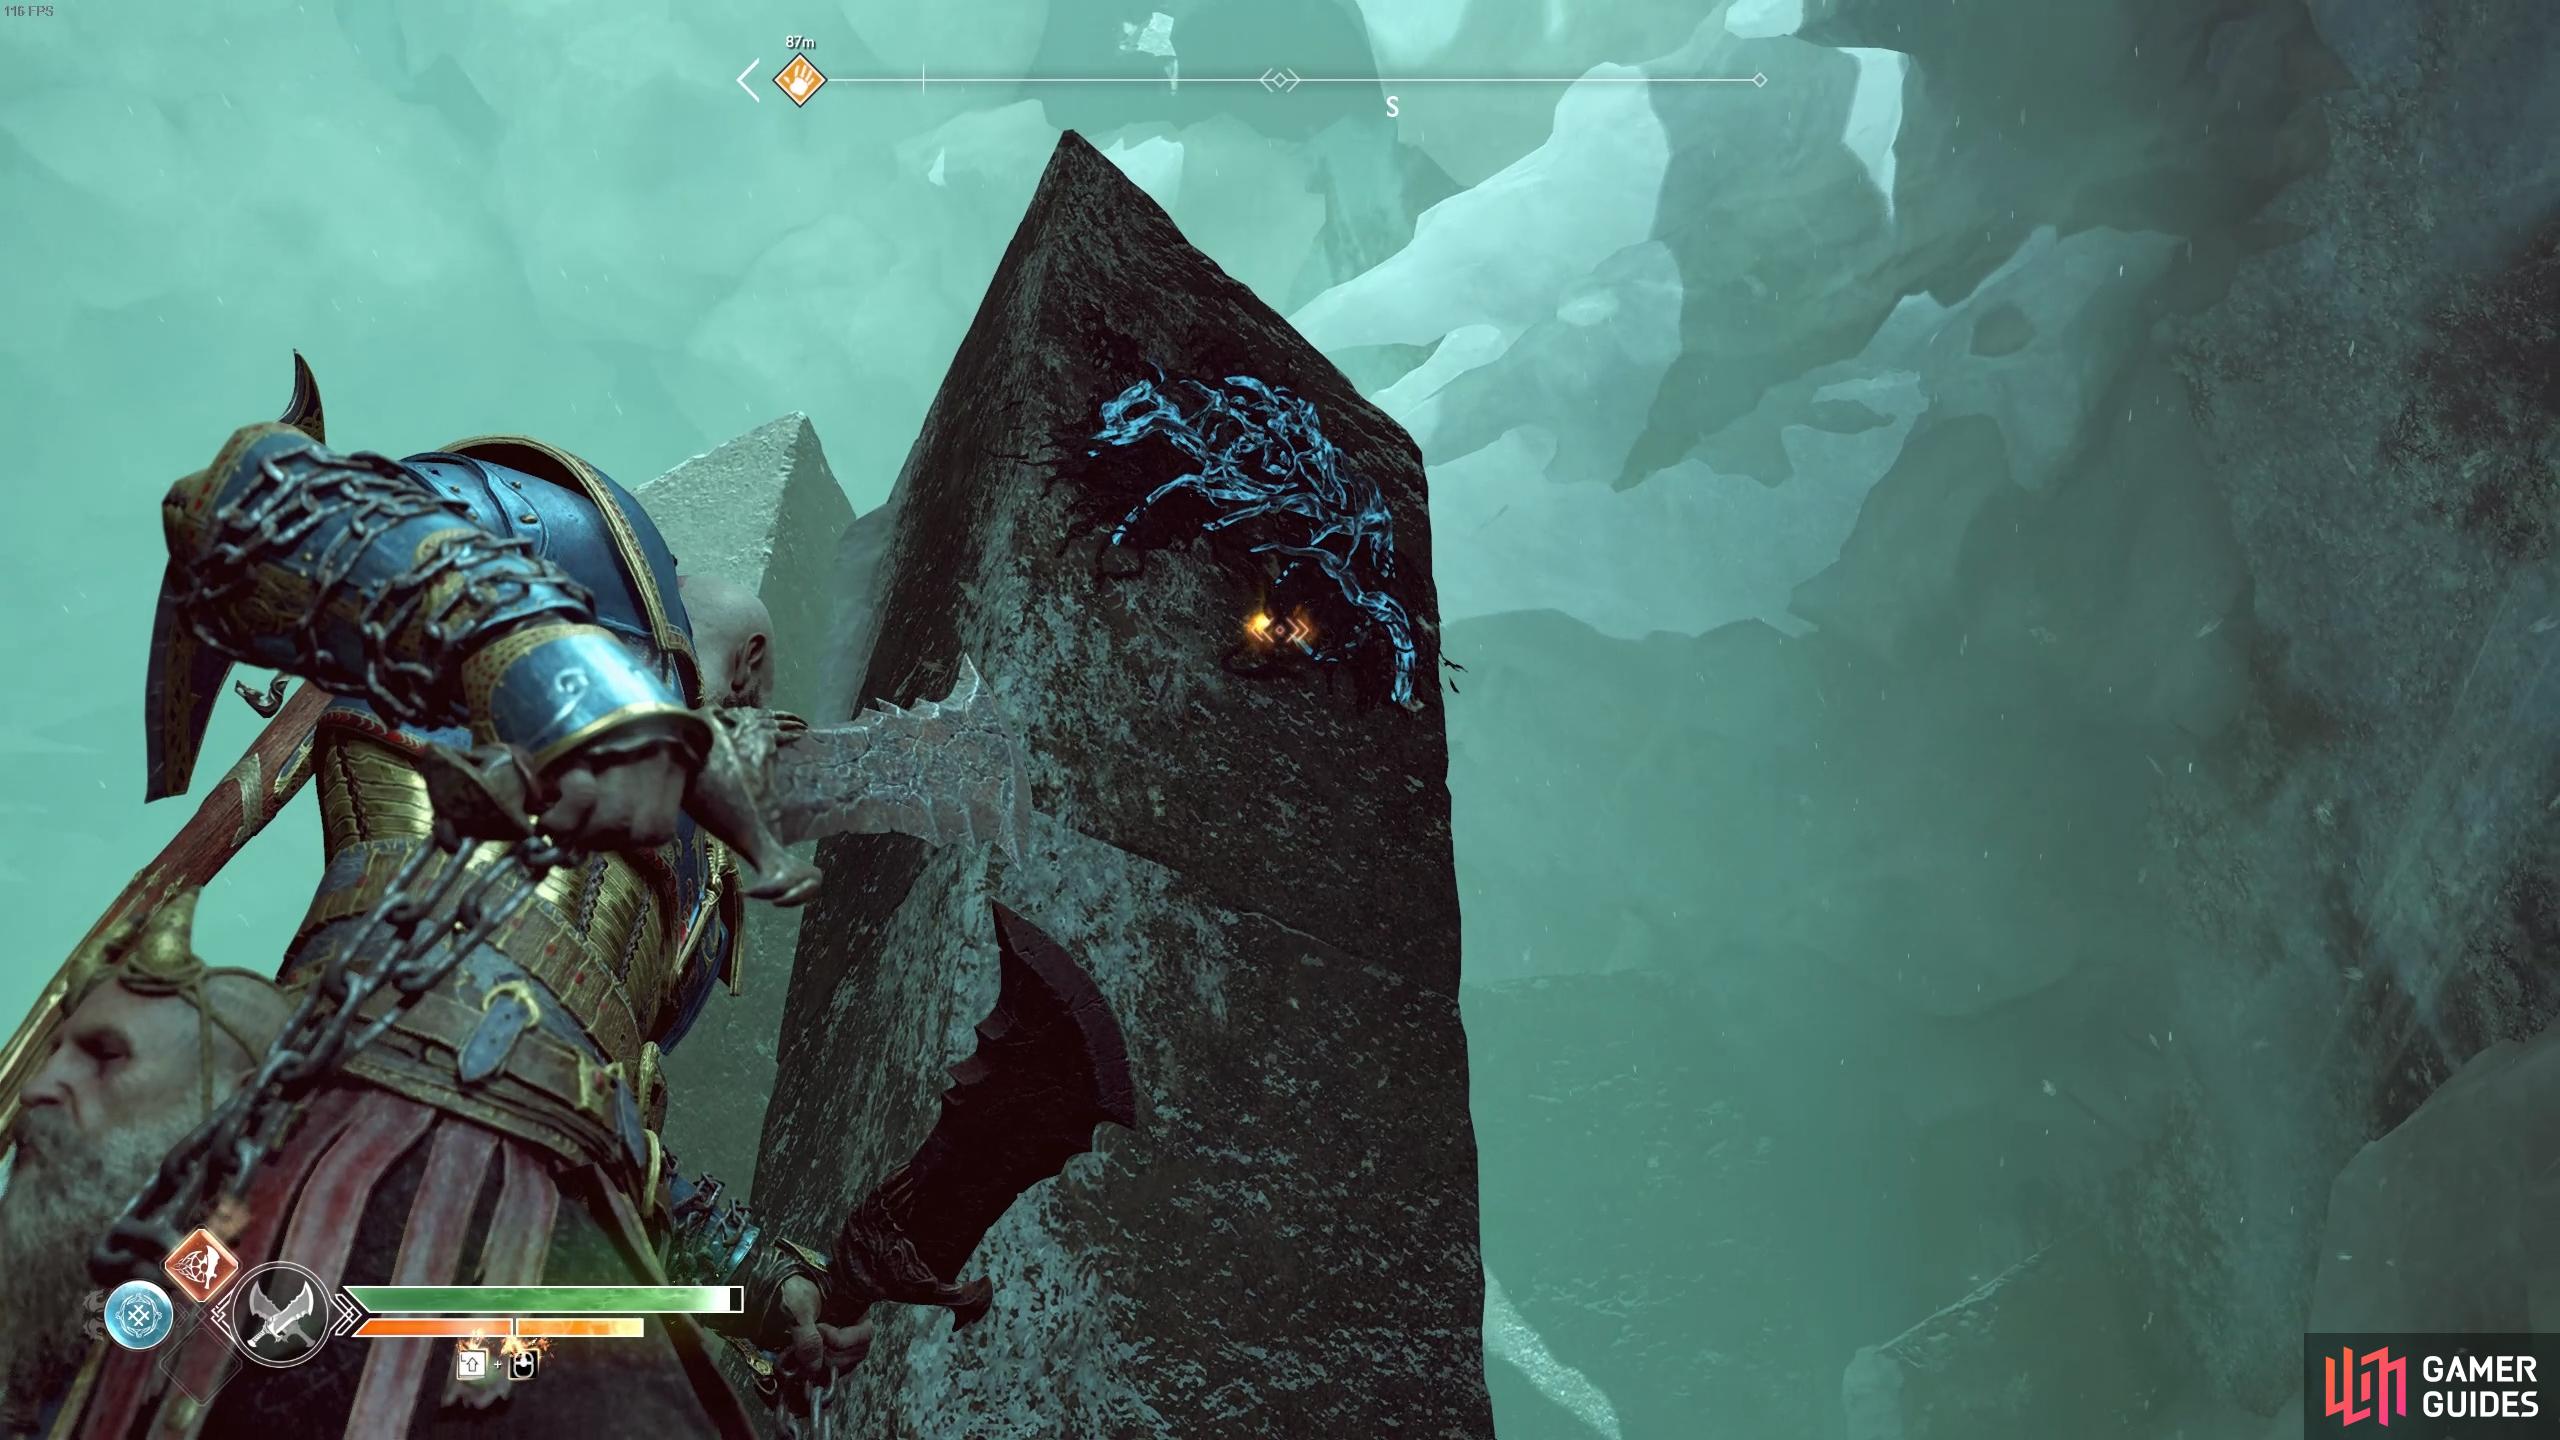 The first pillar near the weapon rack has an Artefact hiding in the bramble.